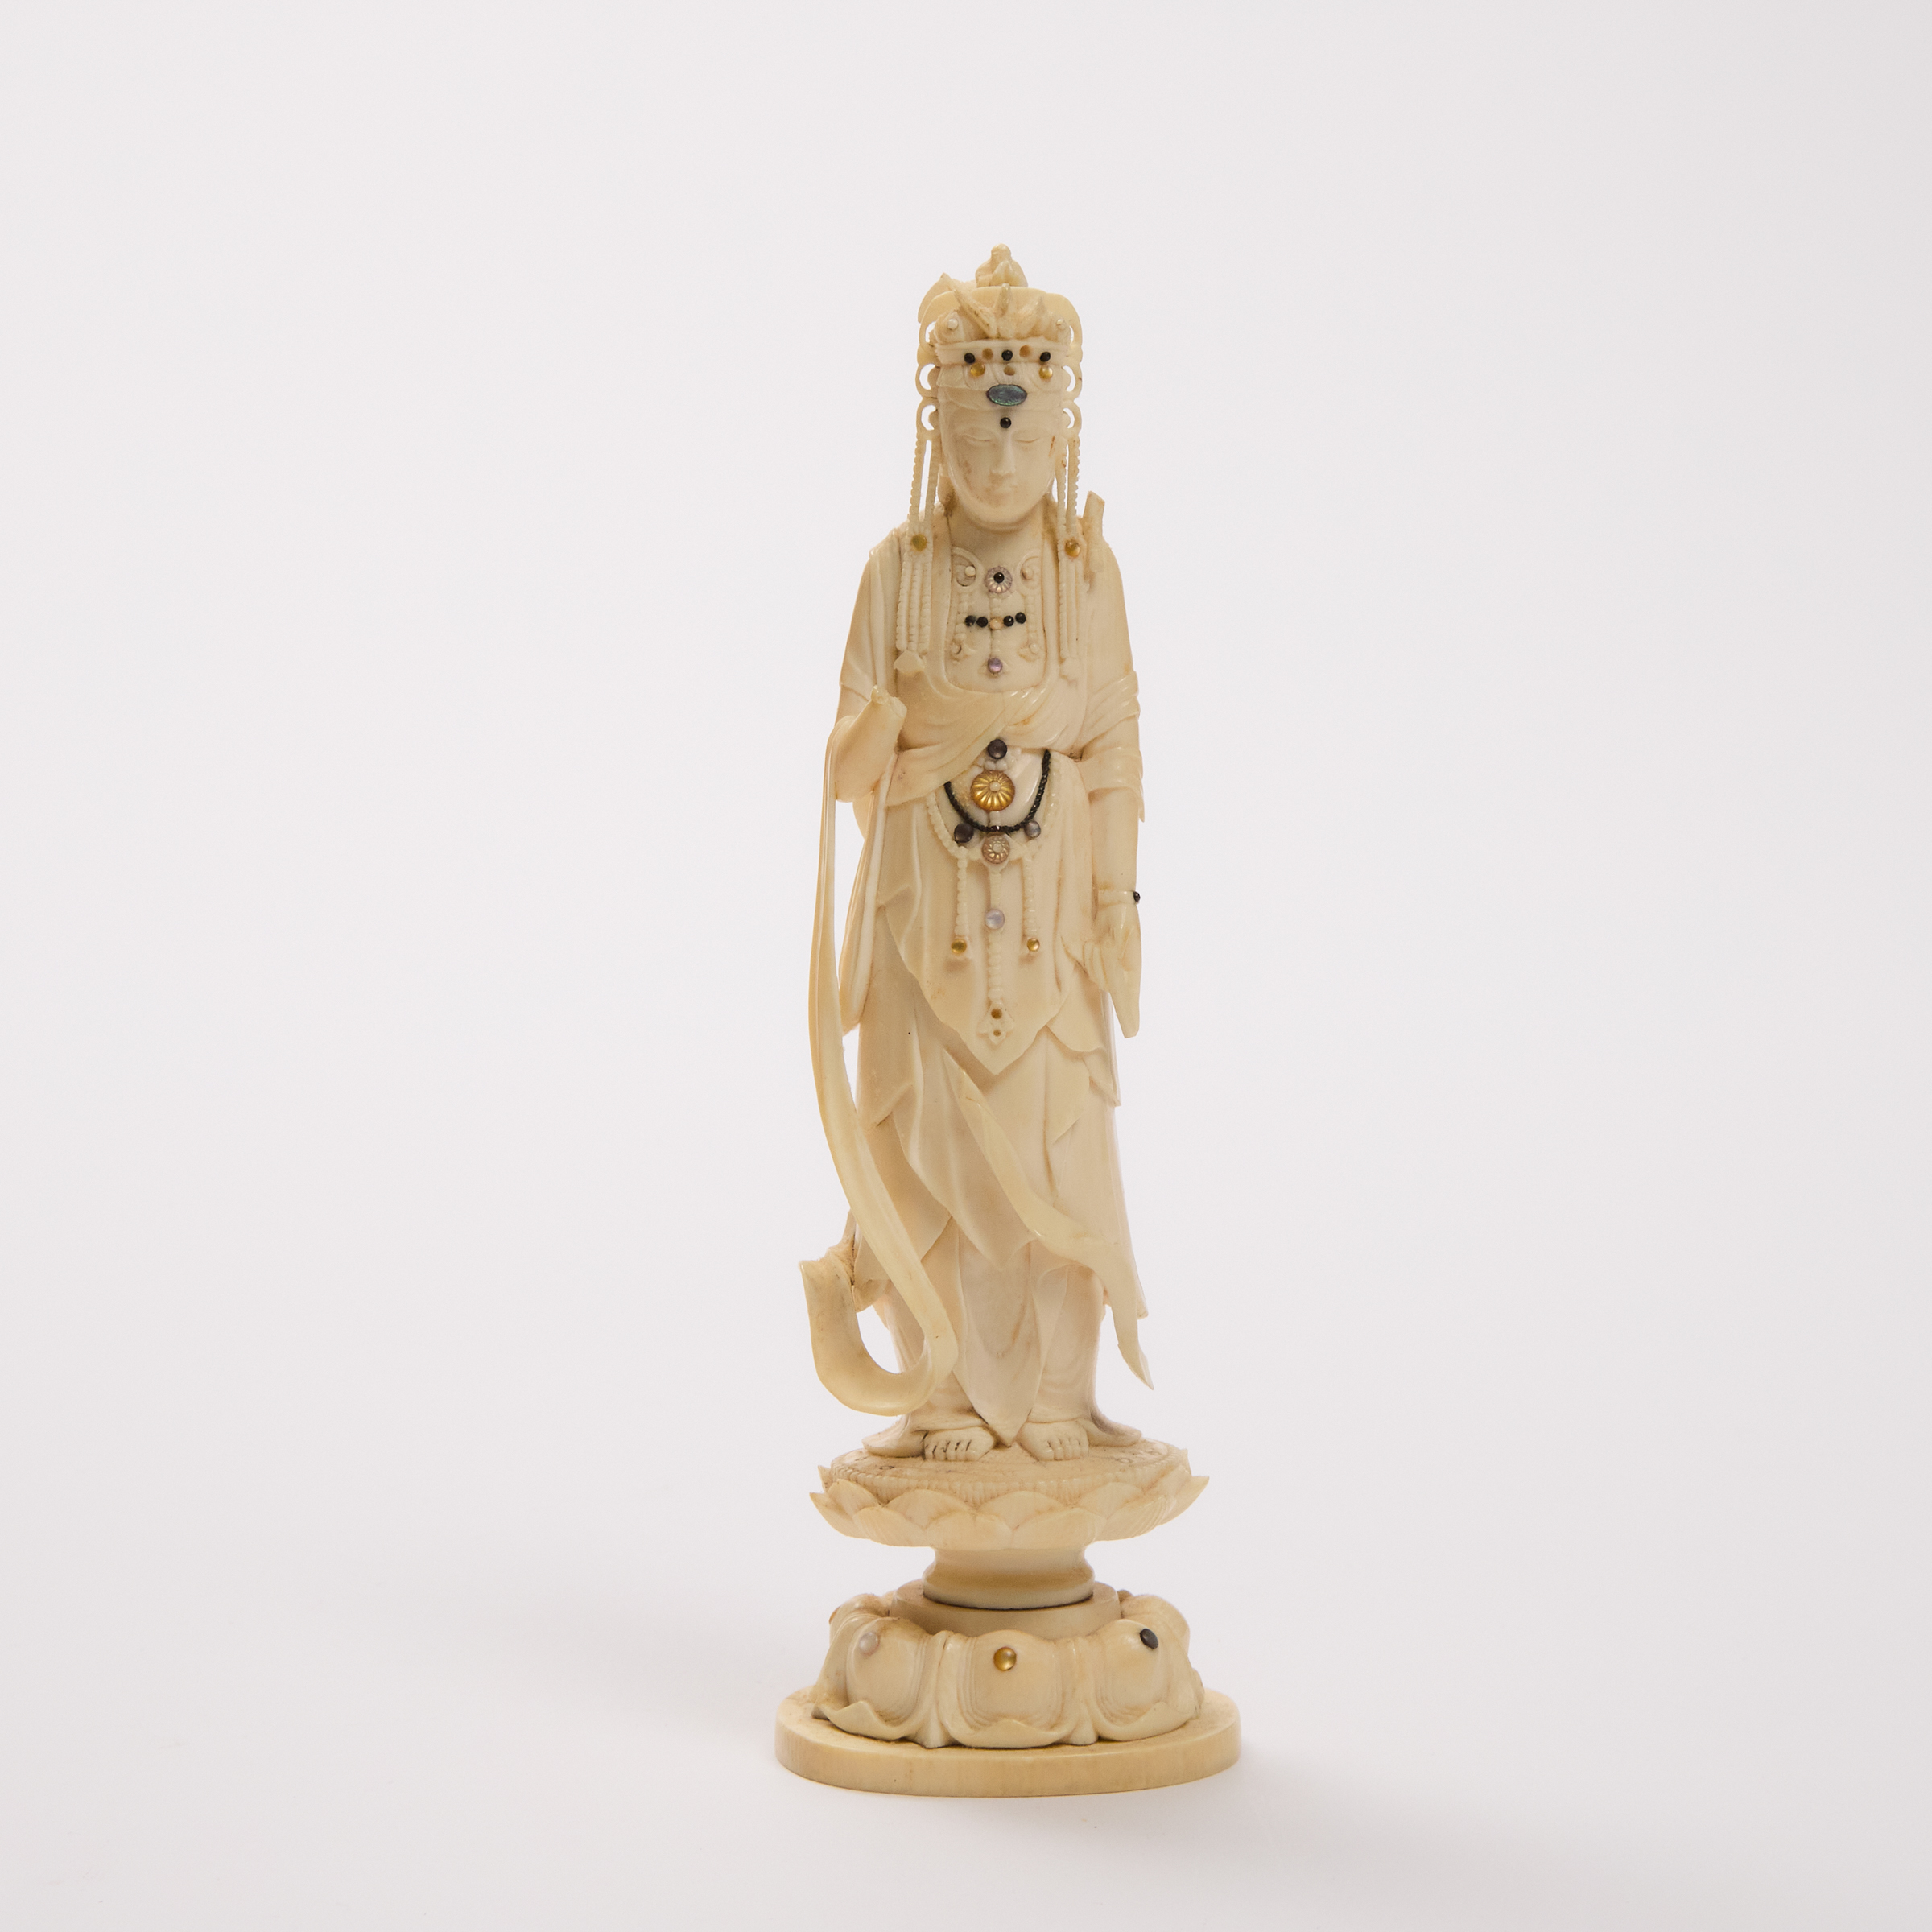 A Shibayama-Inlaid Ivory Figure of Kannon